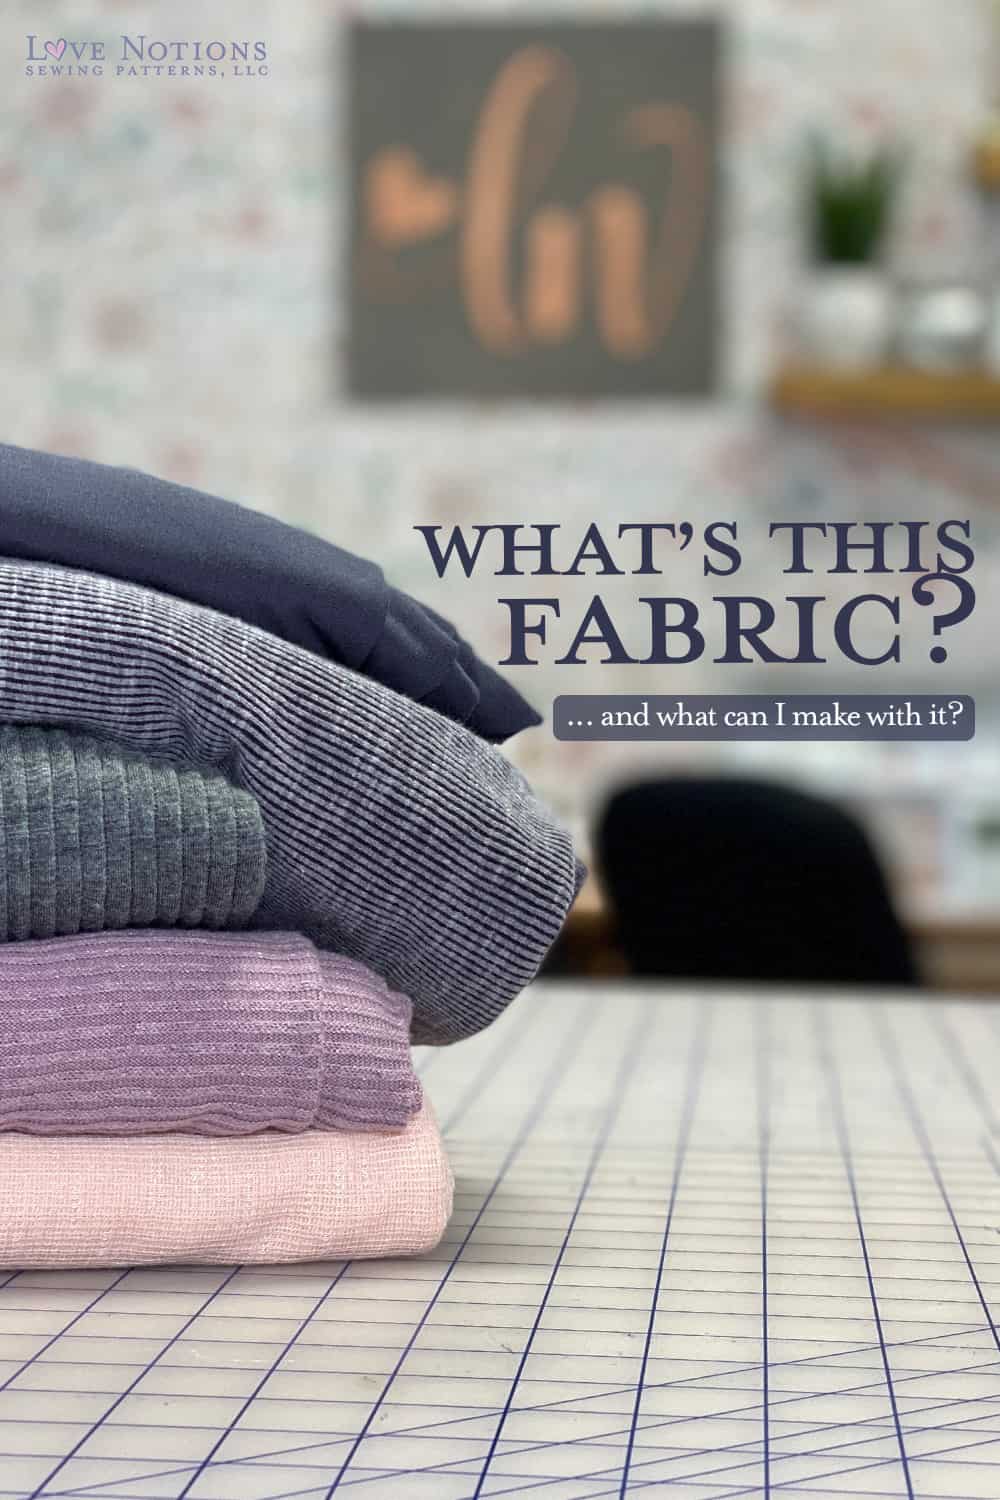 types of fabric